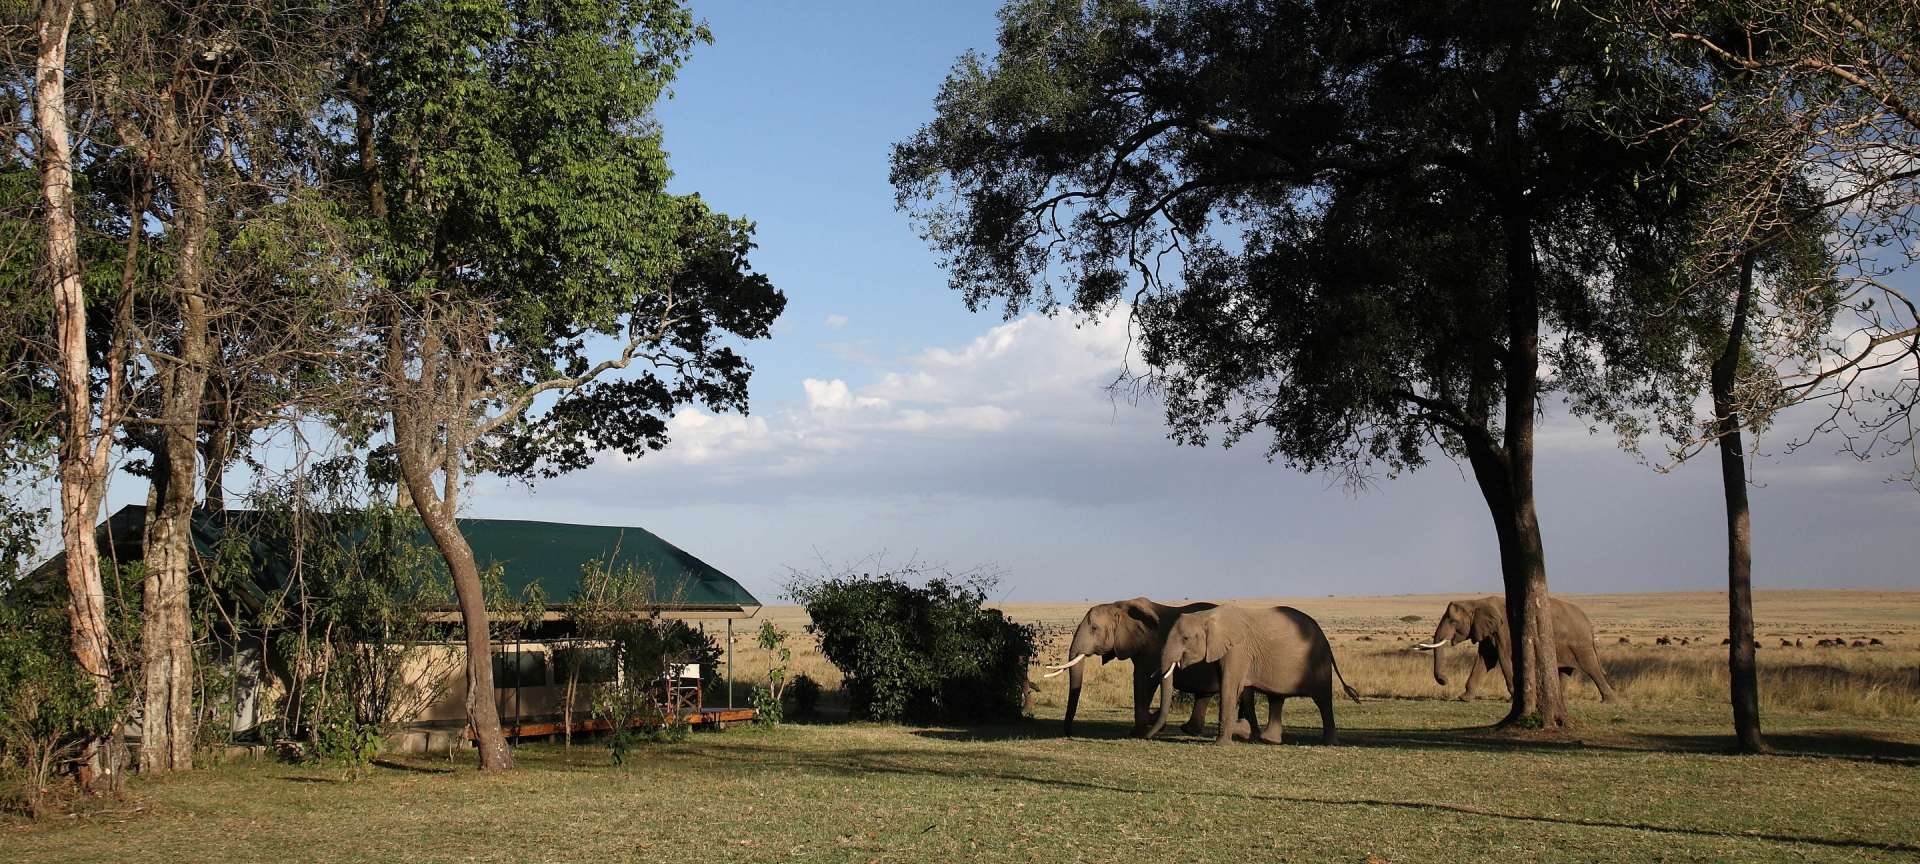 governors safari masai mara